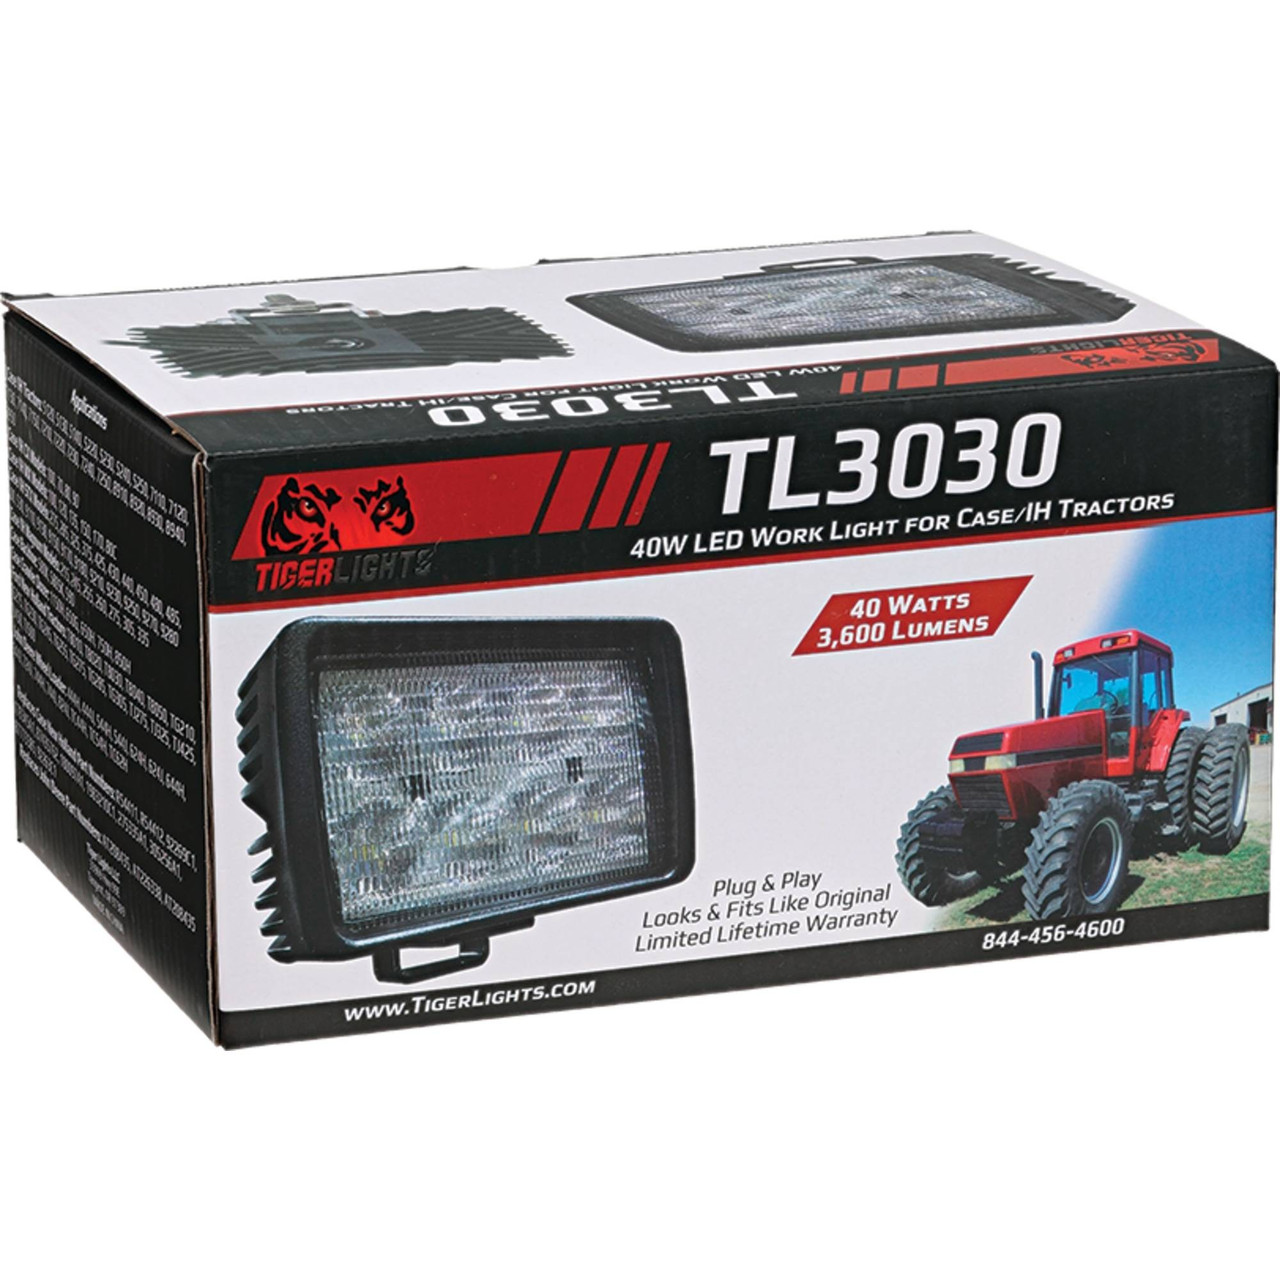 LED Tiger LED Lights Tractor Lights Agricultural from Light 92269C1